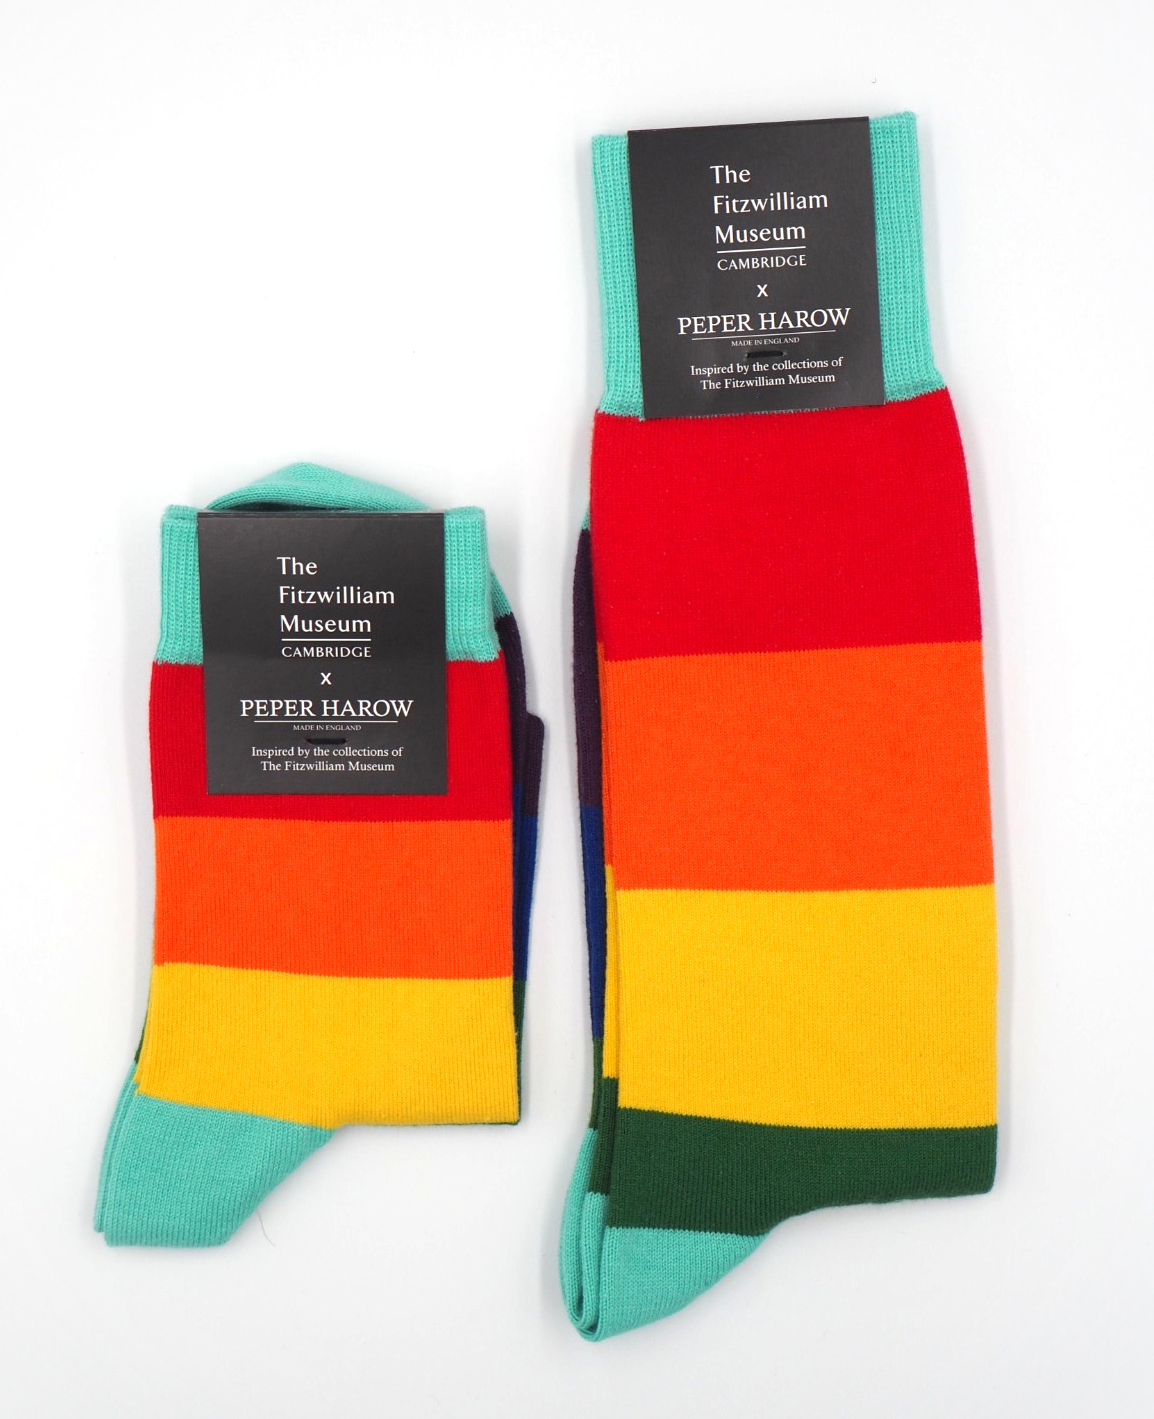 Rainbow socks featuring Cambridge blue colour